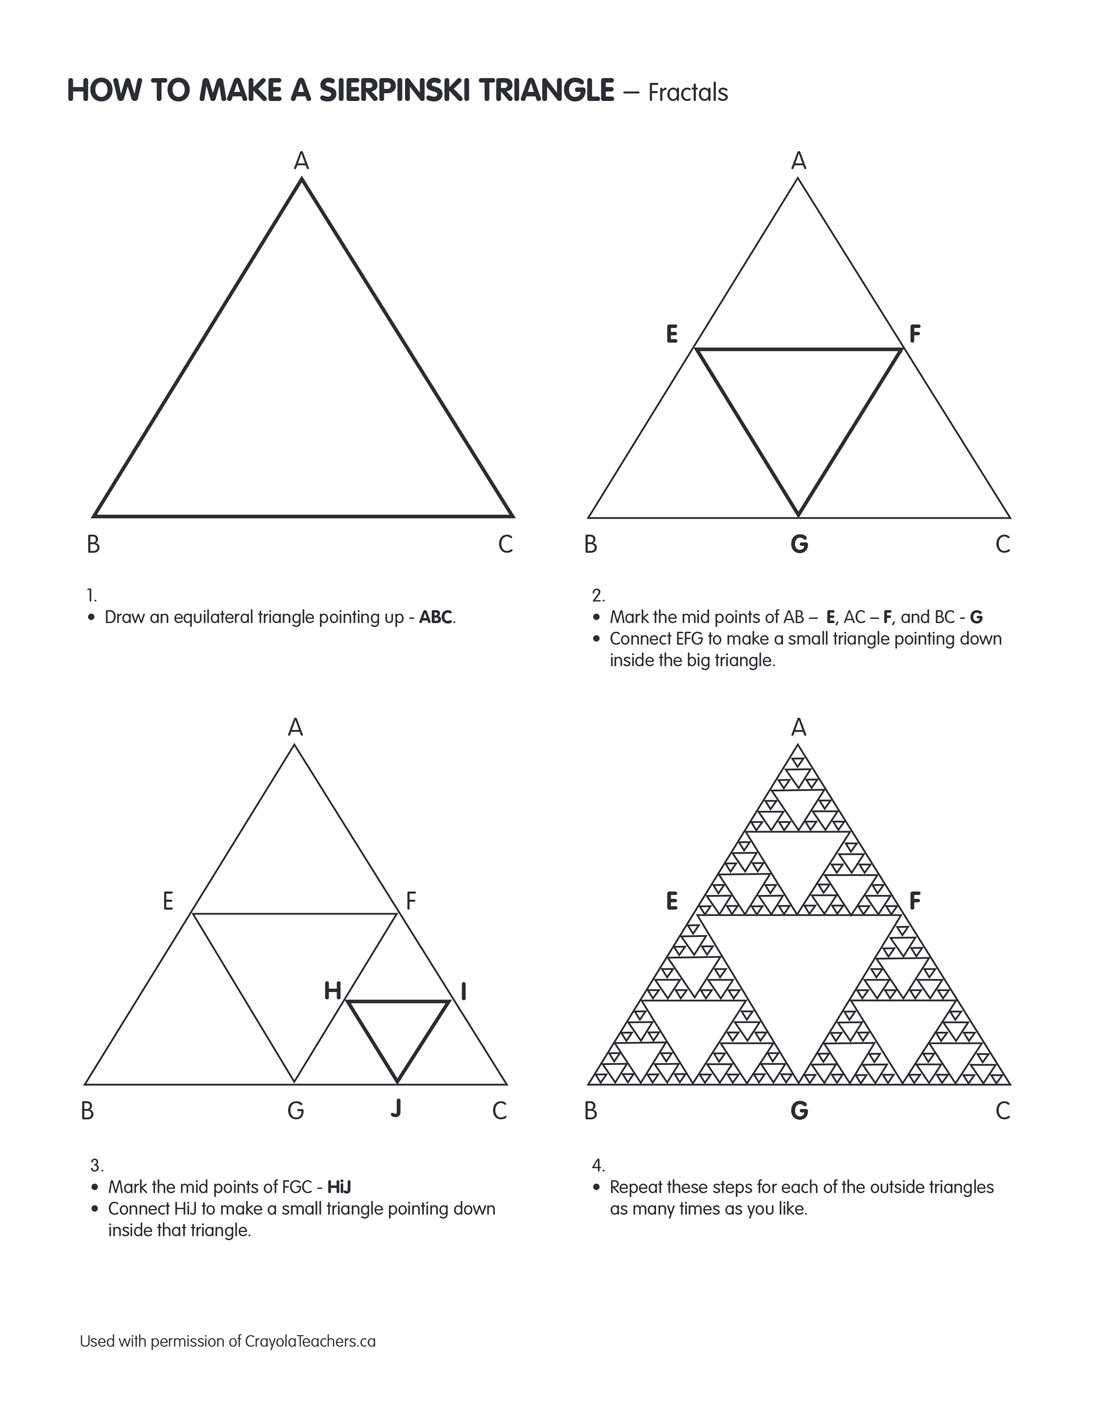 How to Make a Sierpinski Triangley